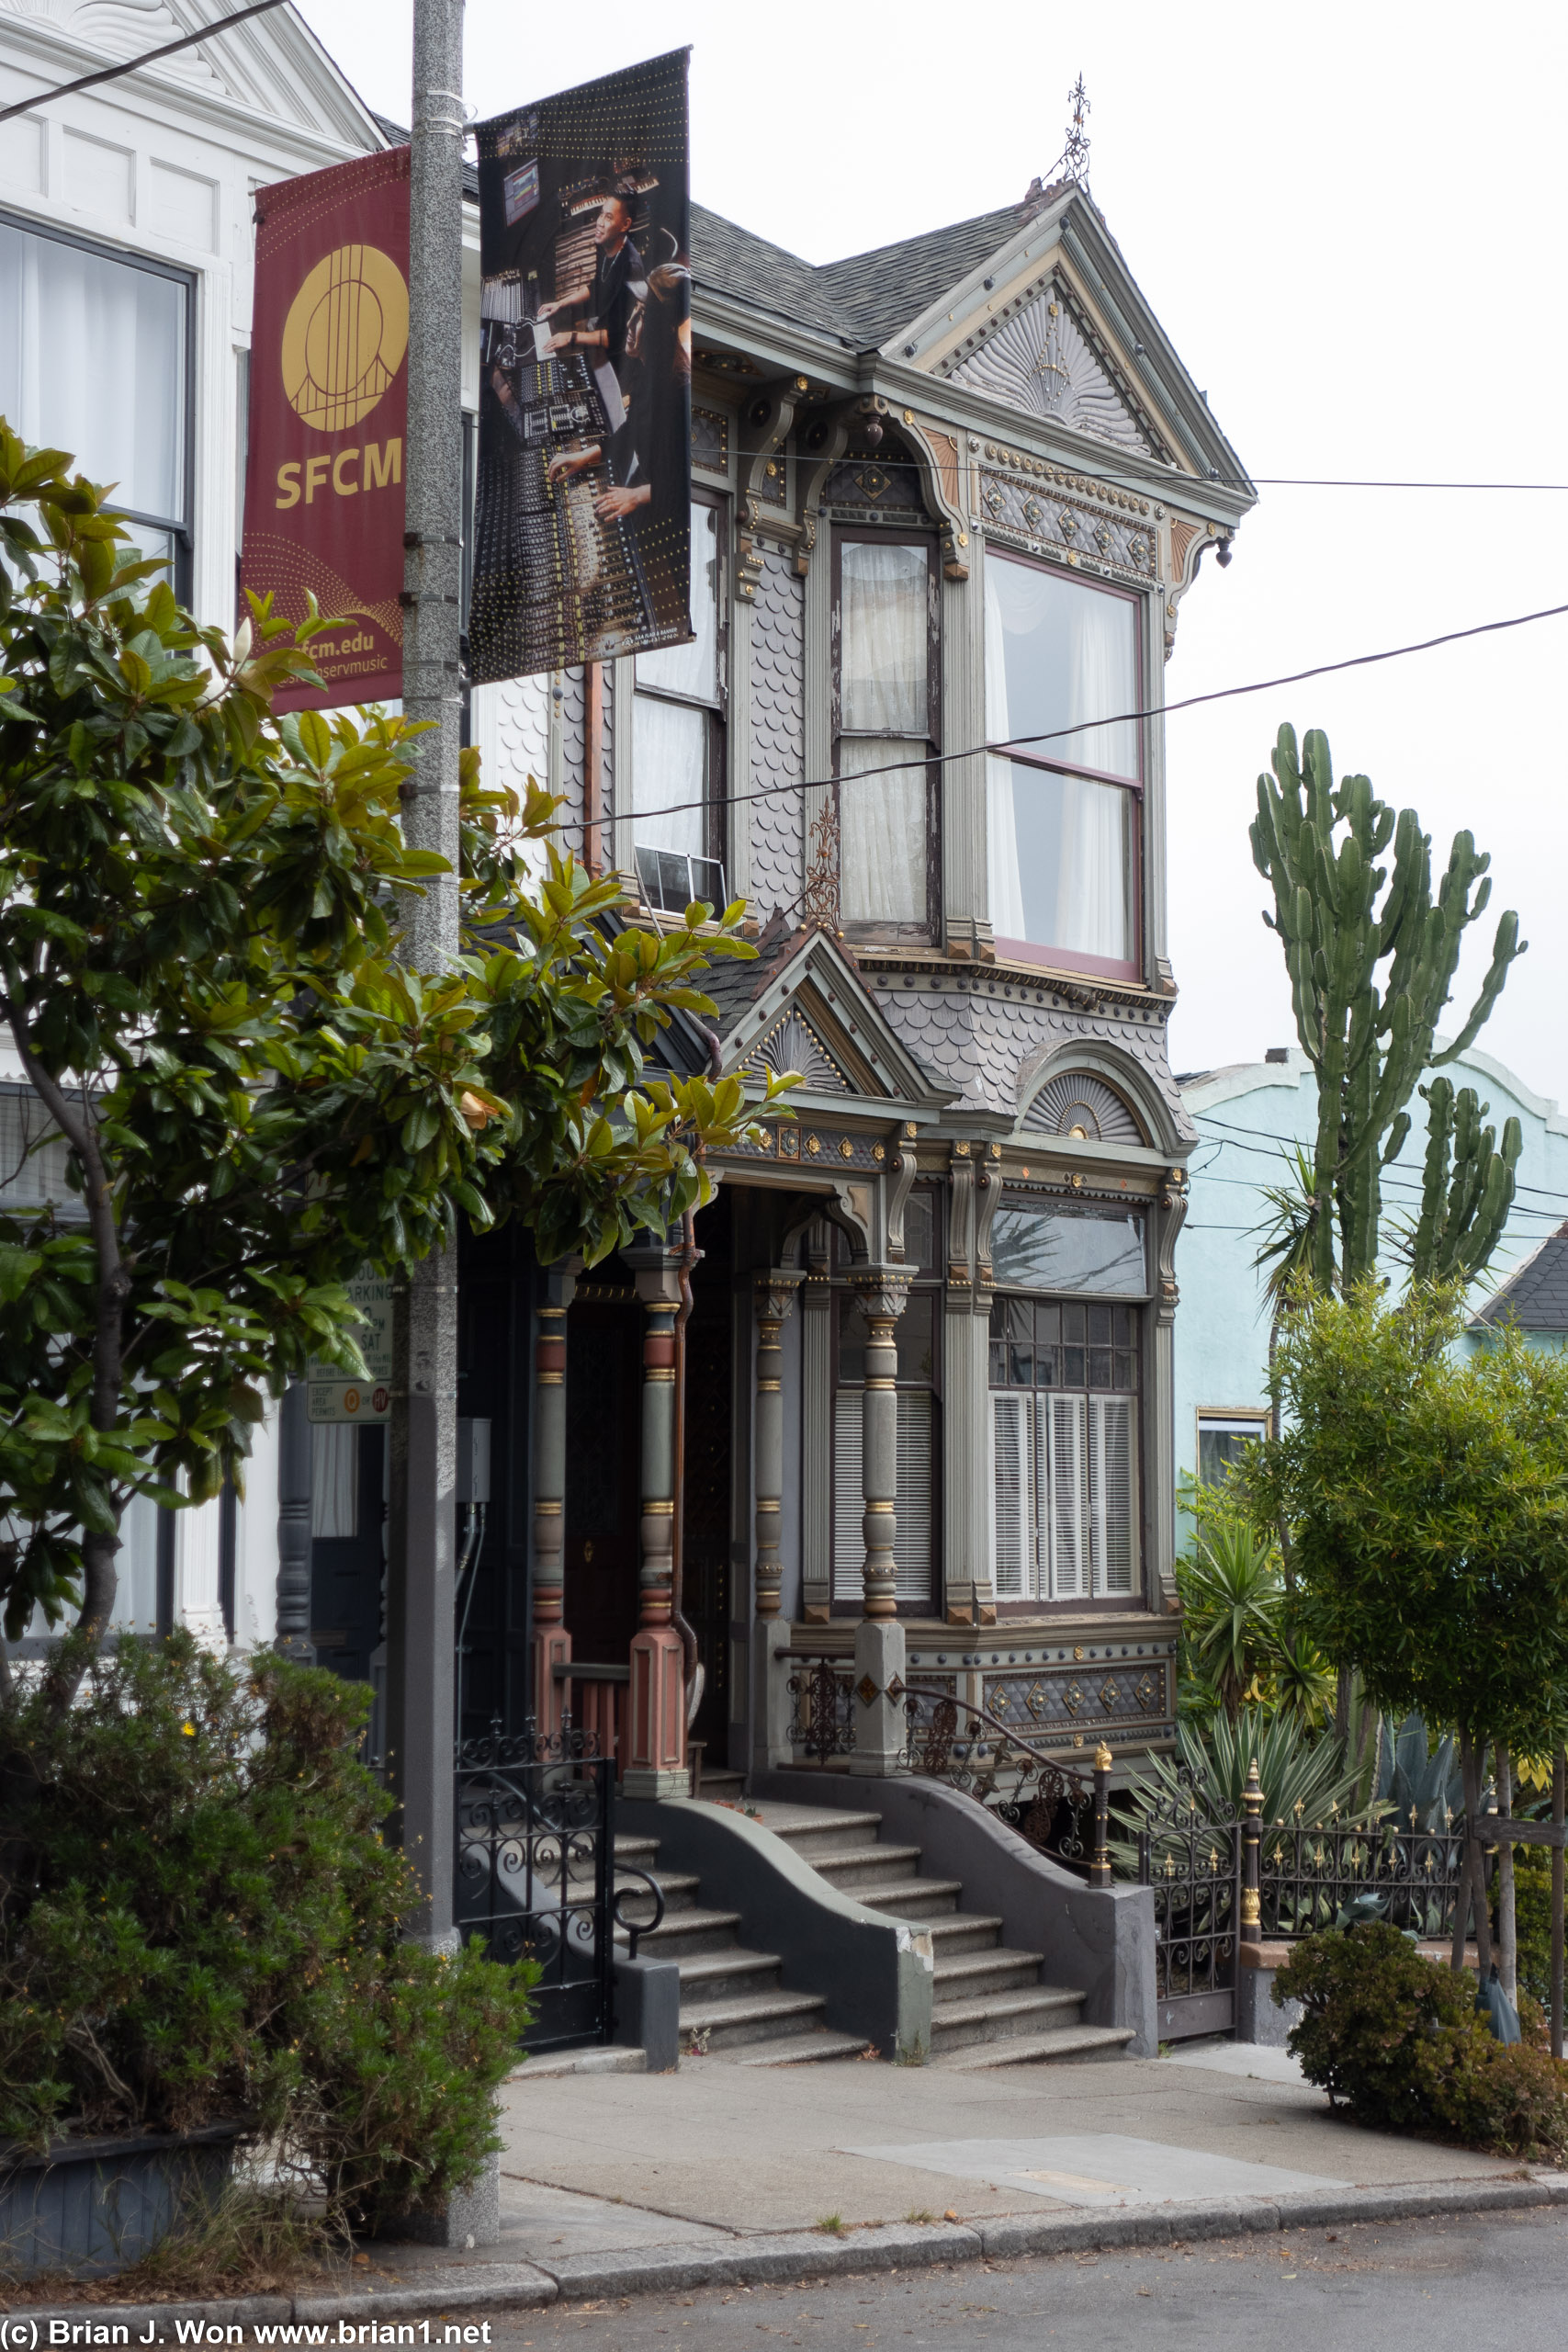 Random stylish houses in San Francisco.